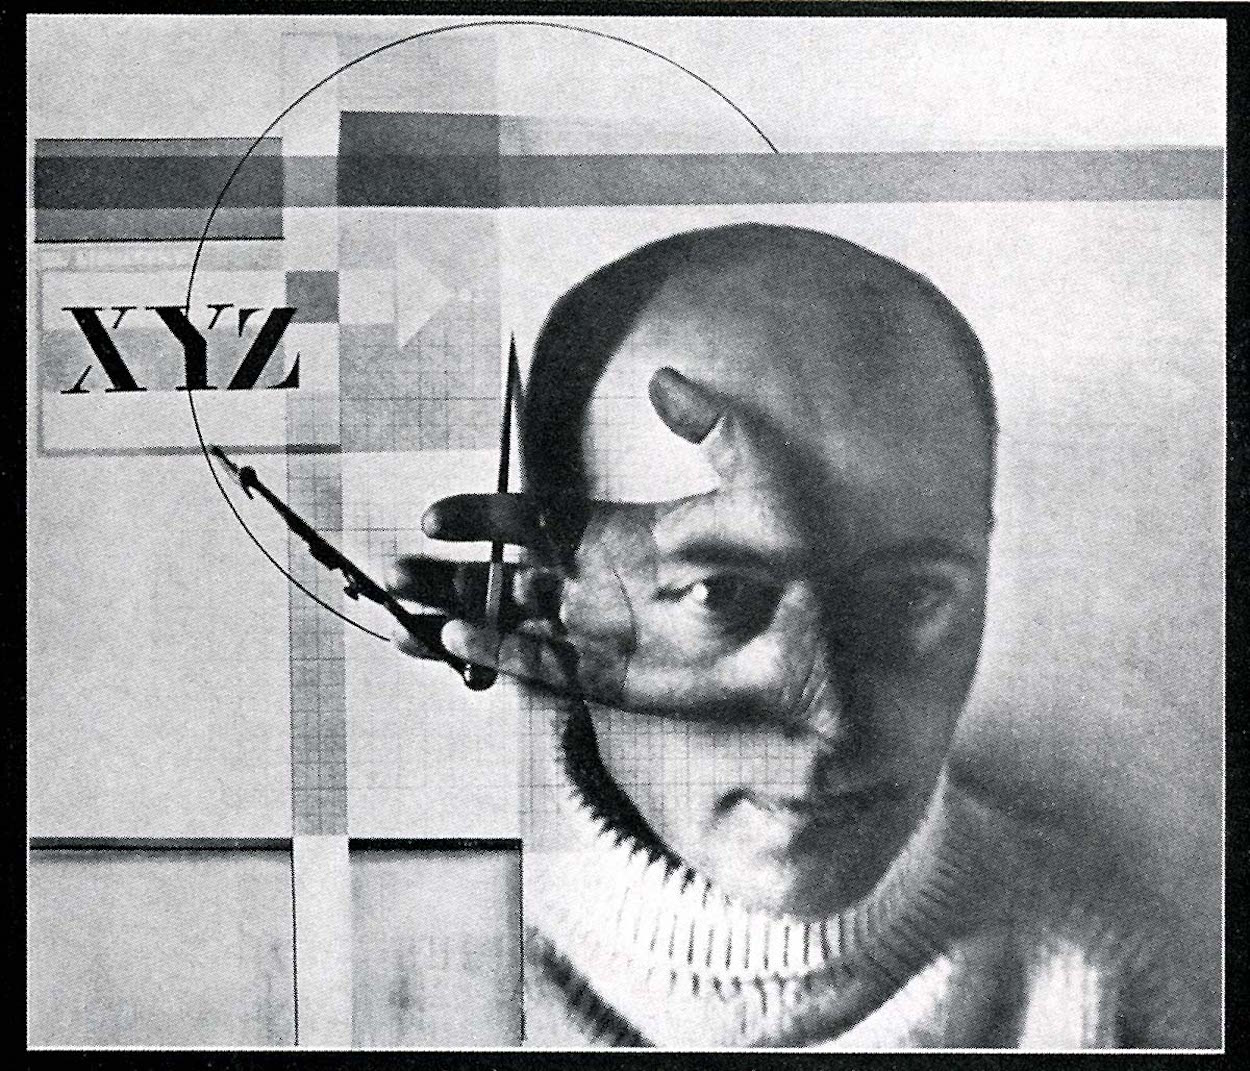 El Lissitzky - 23. November 1890 - 30. Dezember 1941